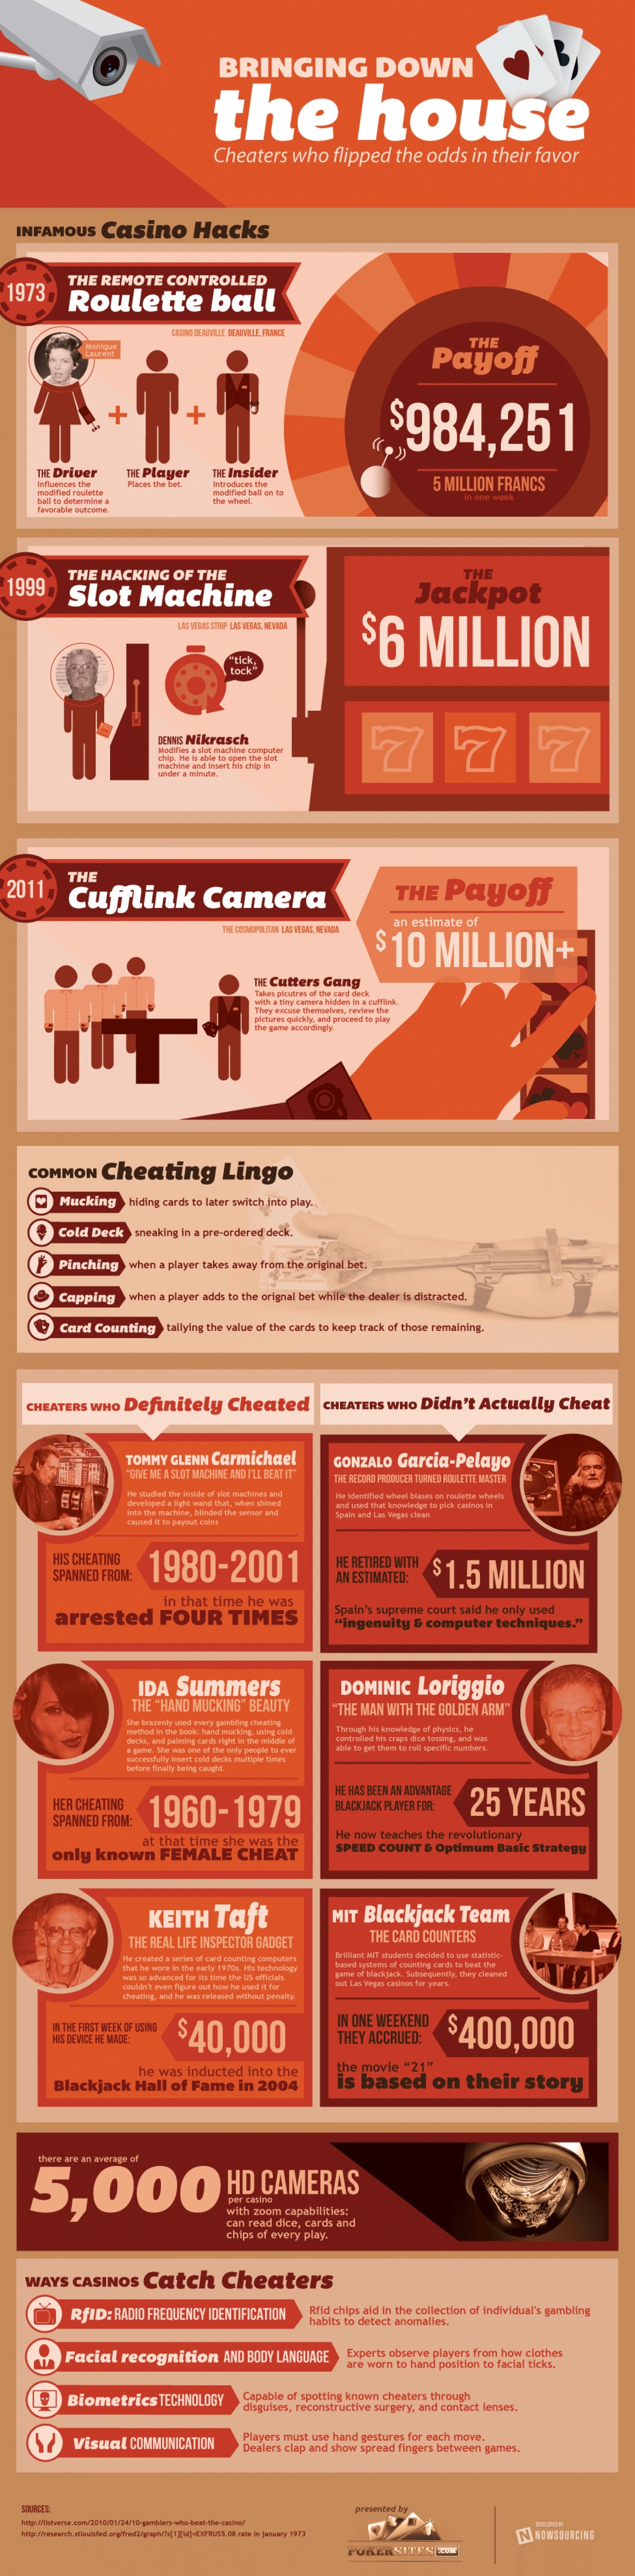 Casino Heroes Odds Hack Infographic